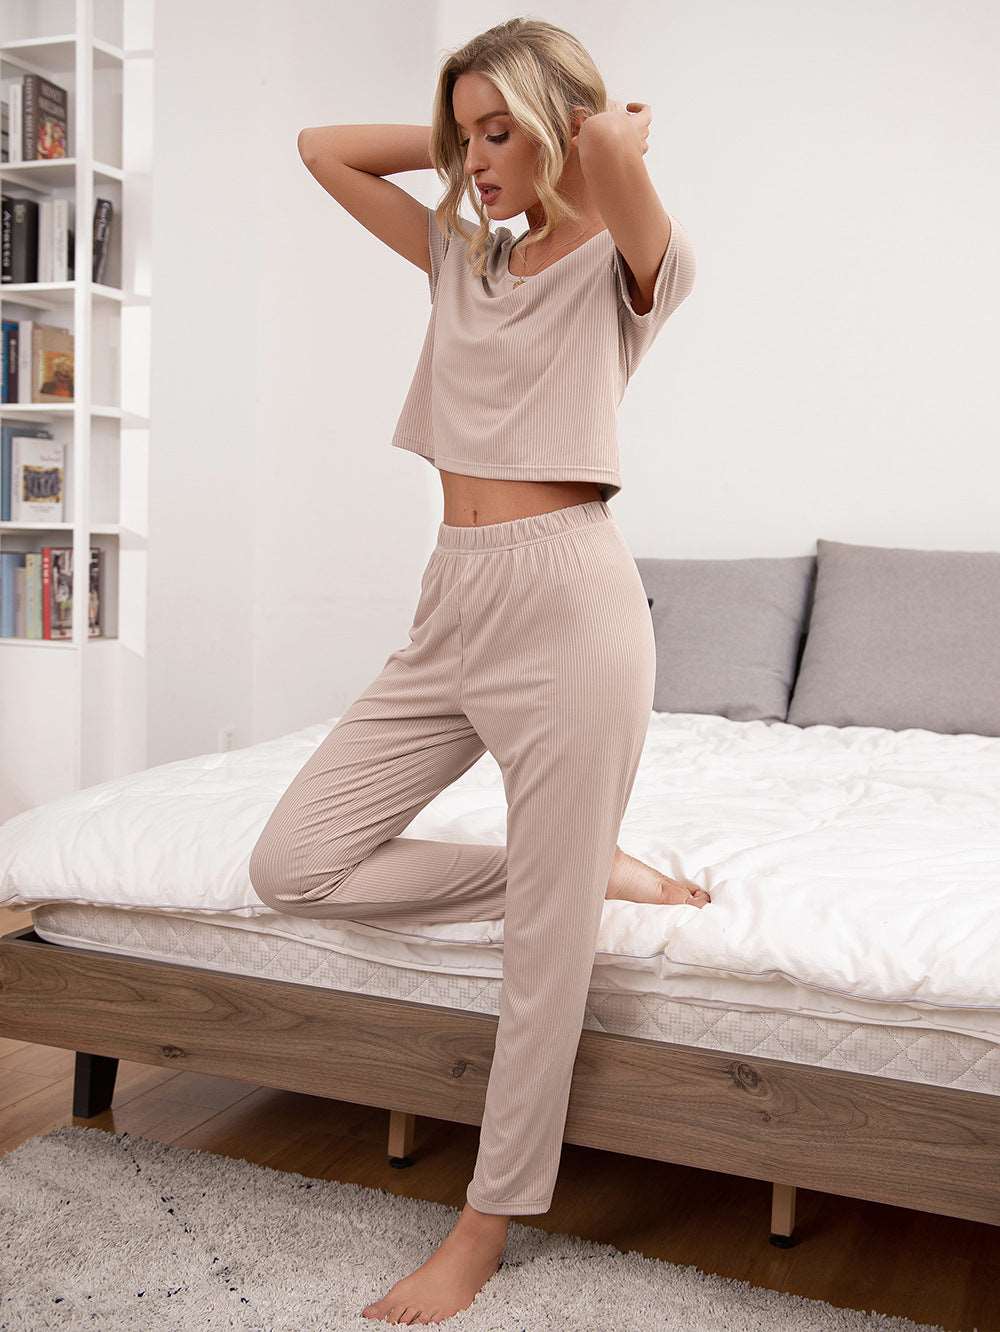 A Basic Top and Pants Loungewear Set